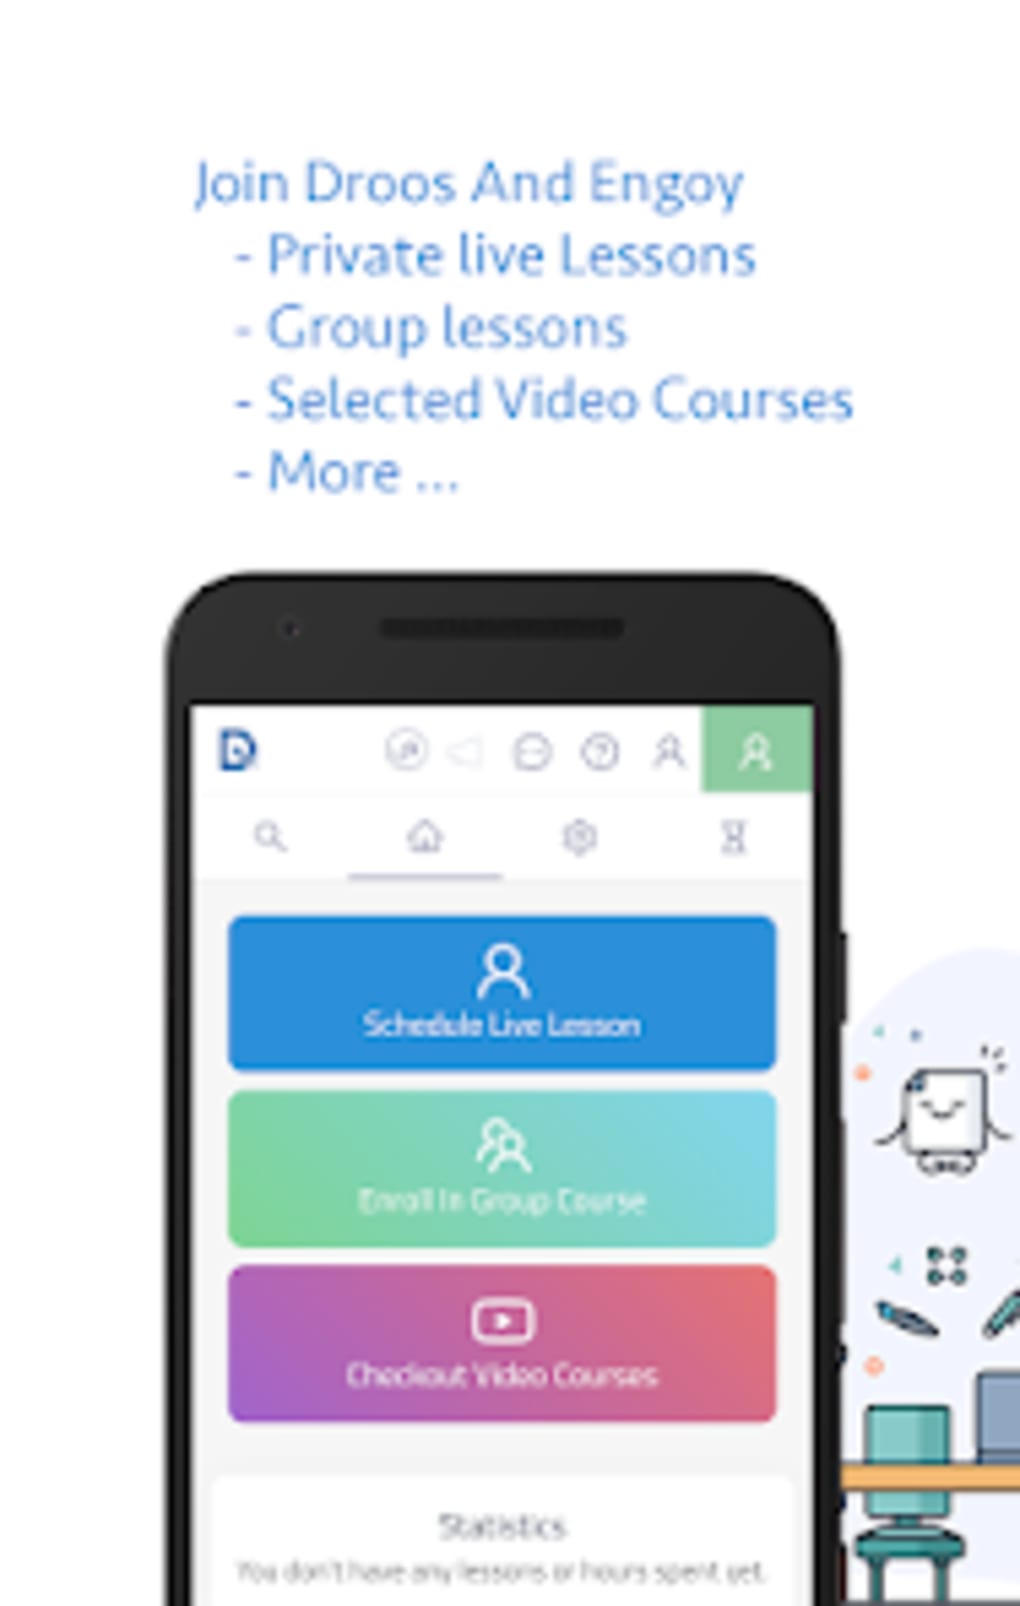 Droos Online tutoring platform for Android - Download